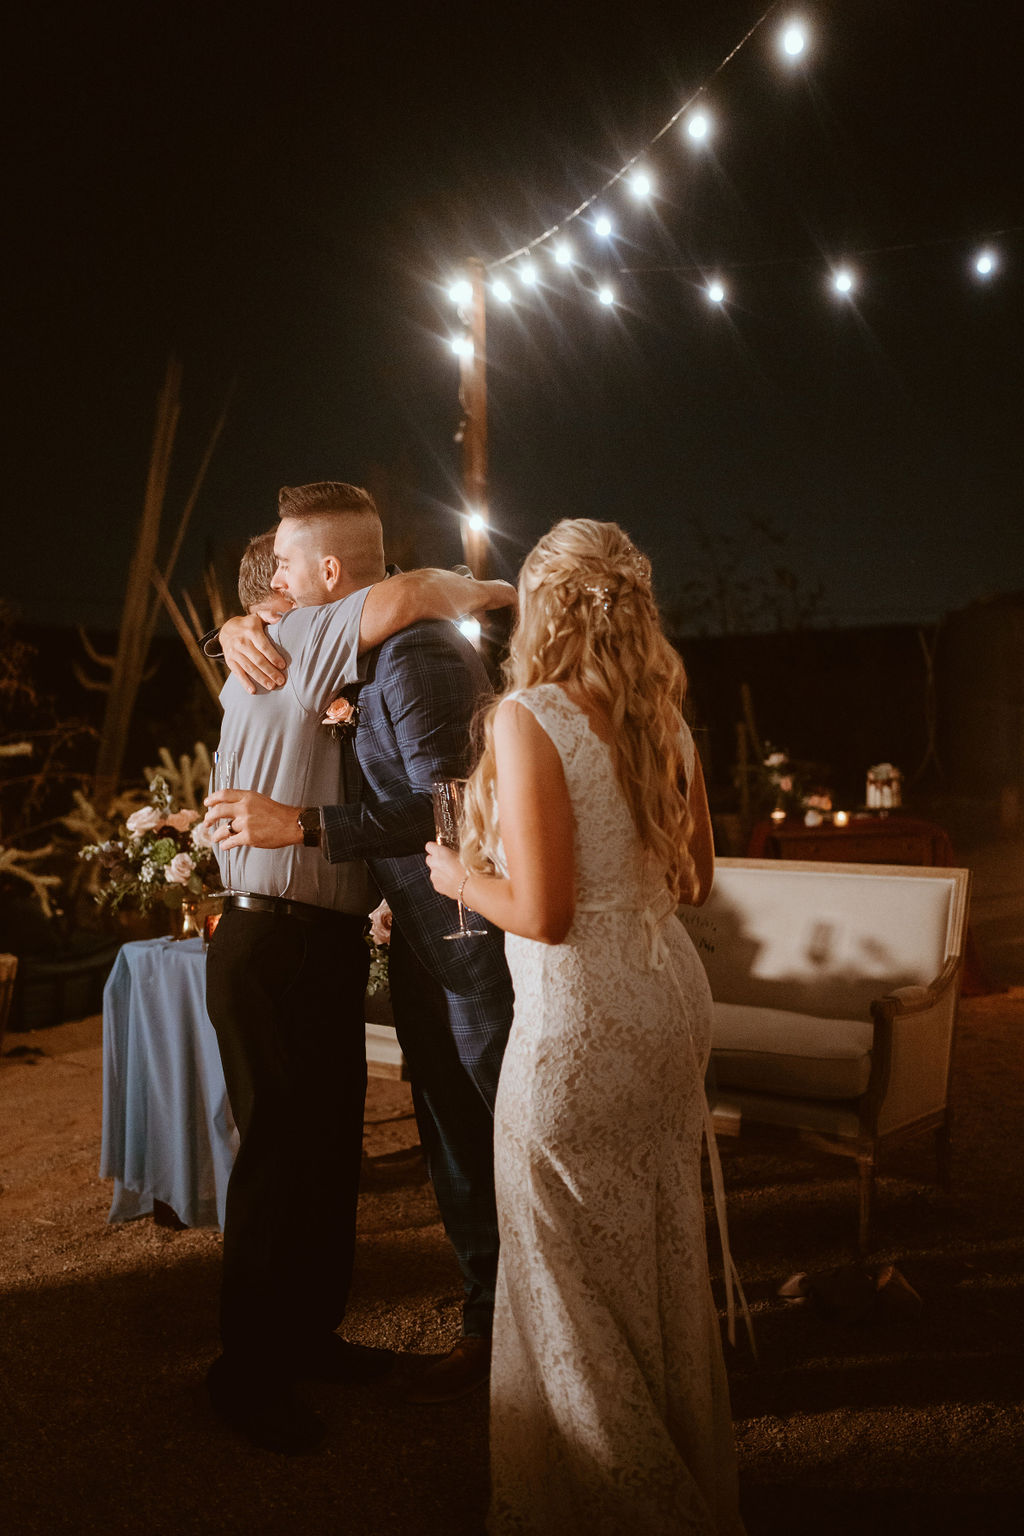 Man Hugging Groom during Outdoor Wedding Reception 